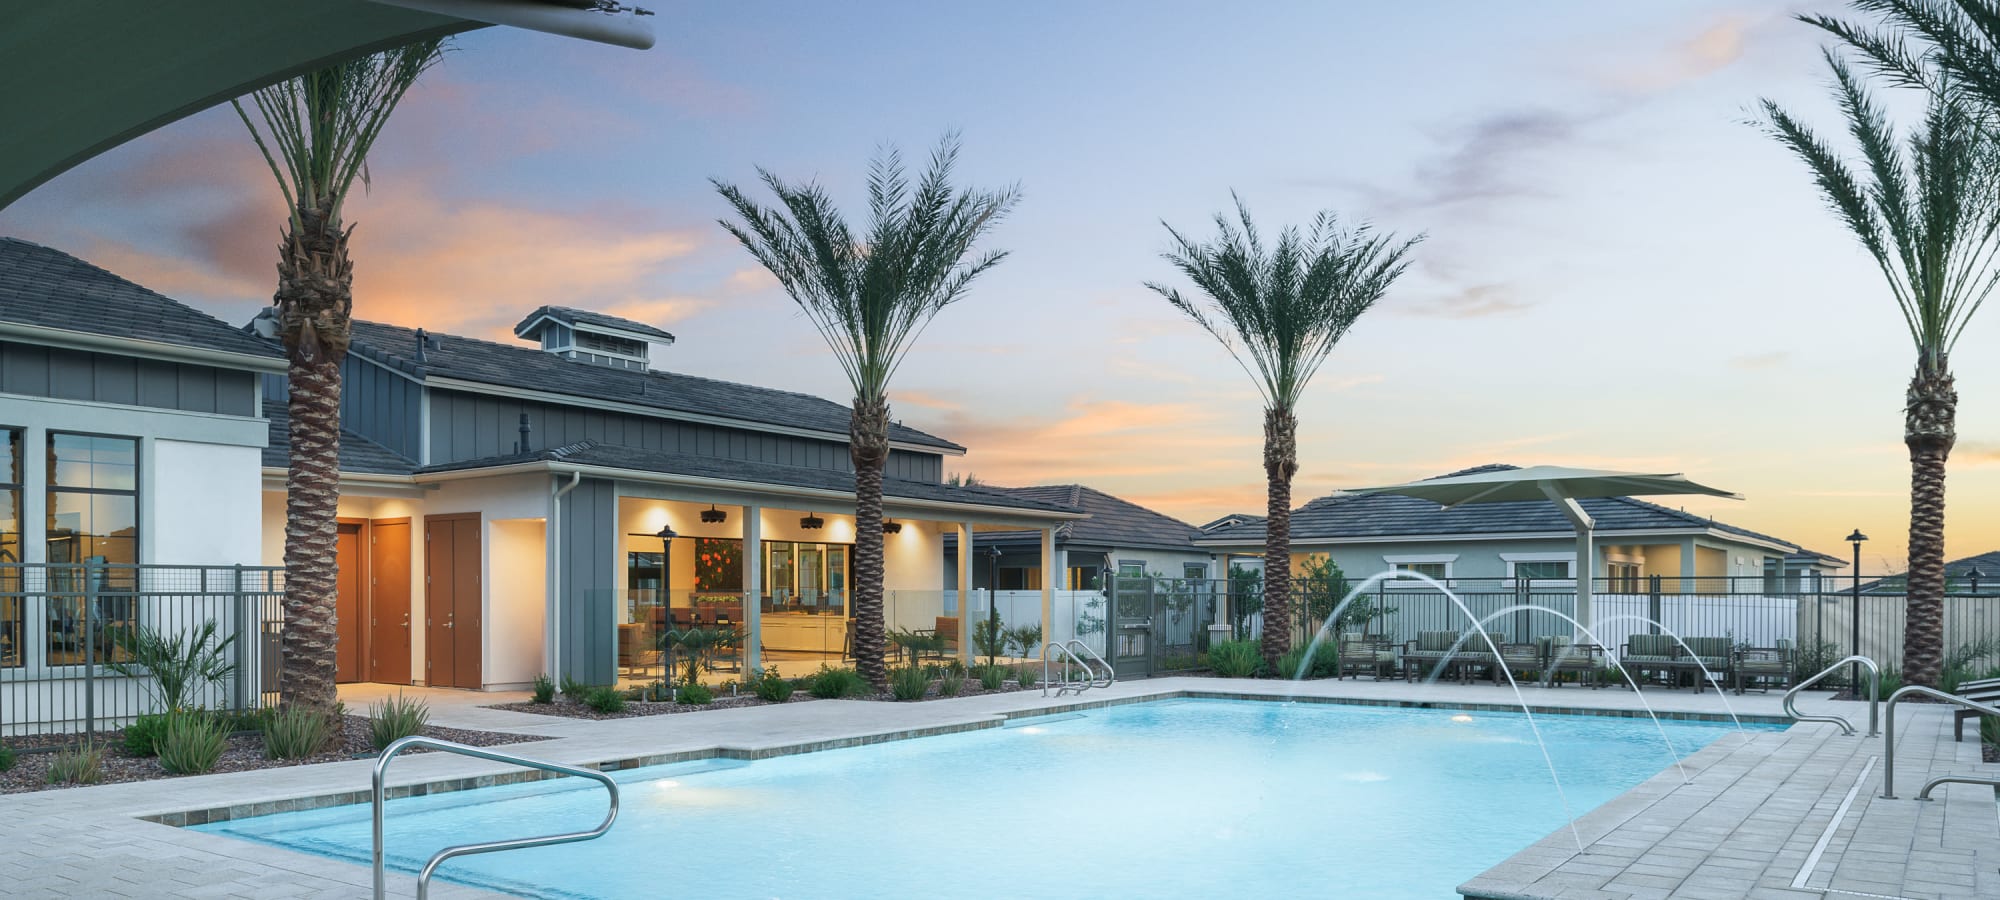 Pool and clubhouse at Peralta Vista in Mesa, Arizona